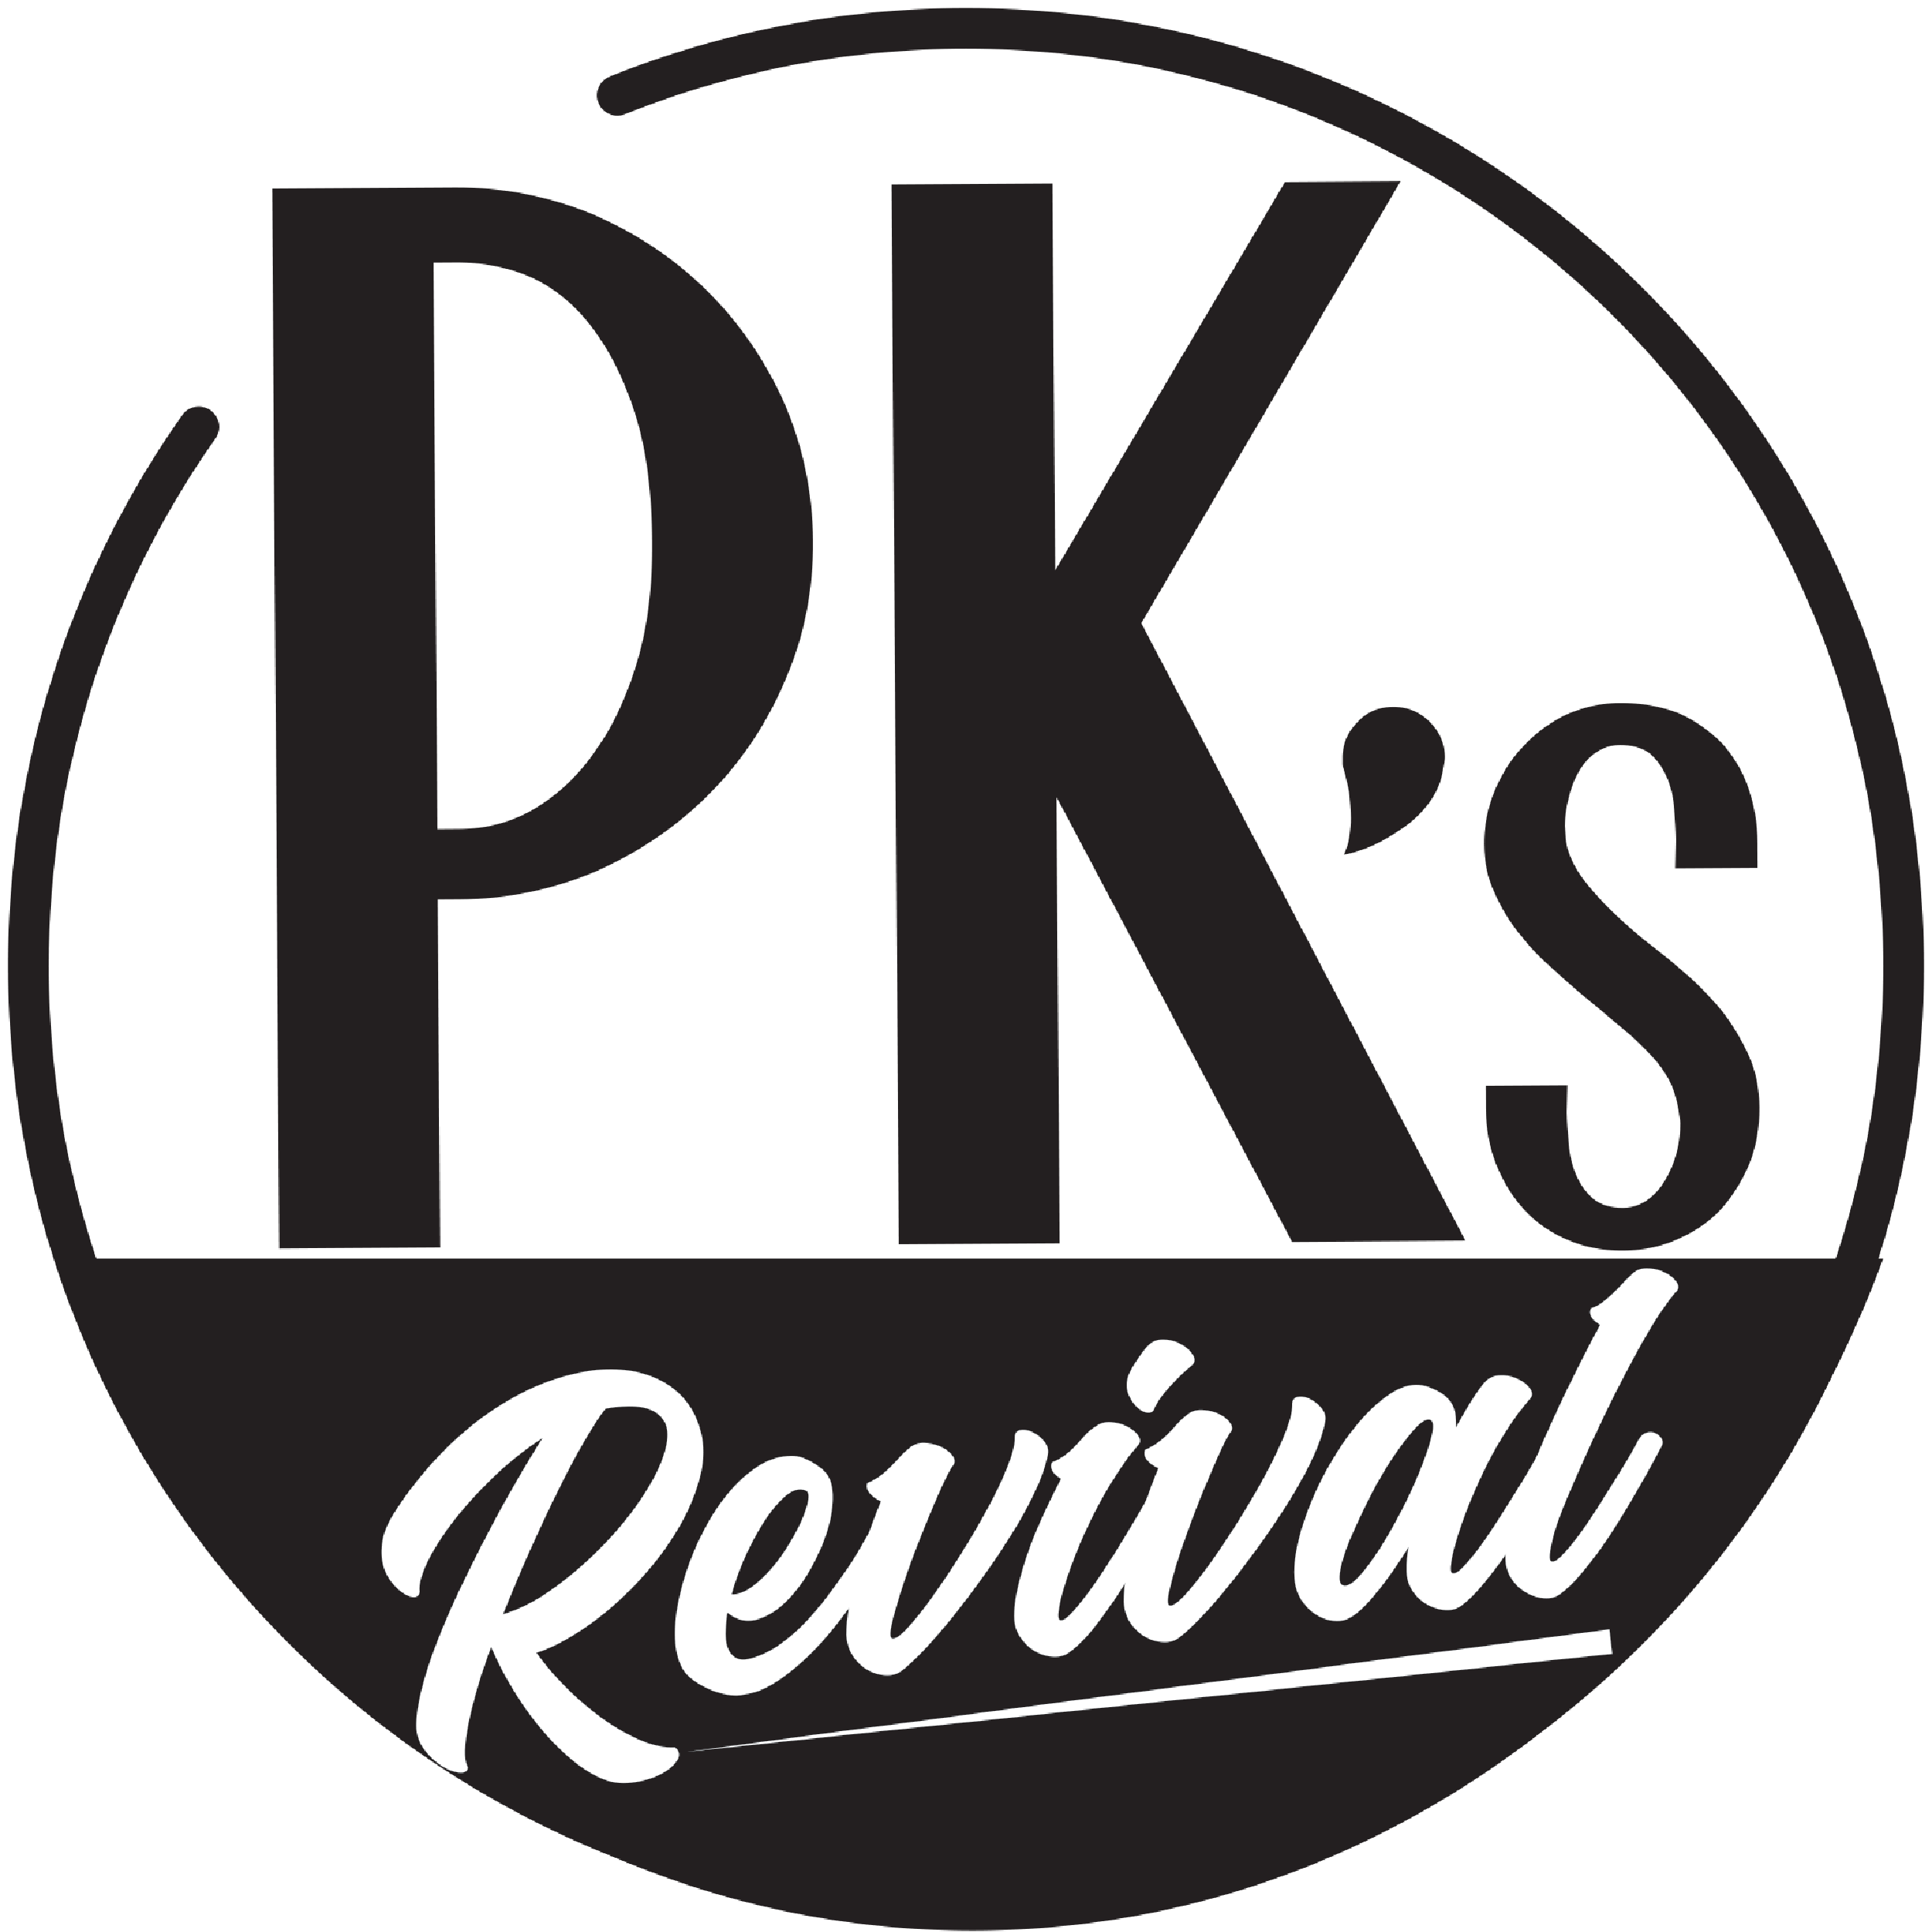 PK's Revival Home